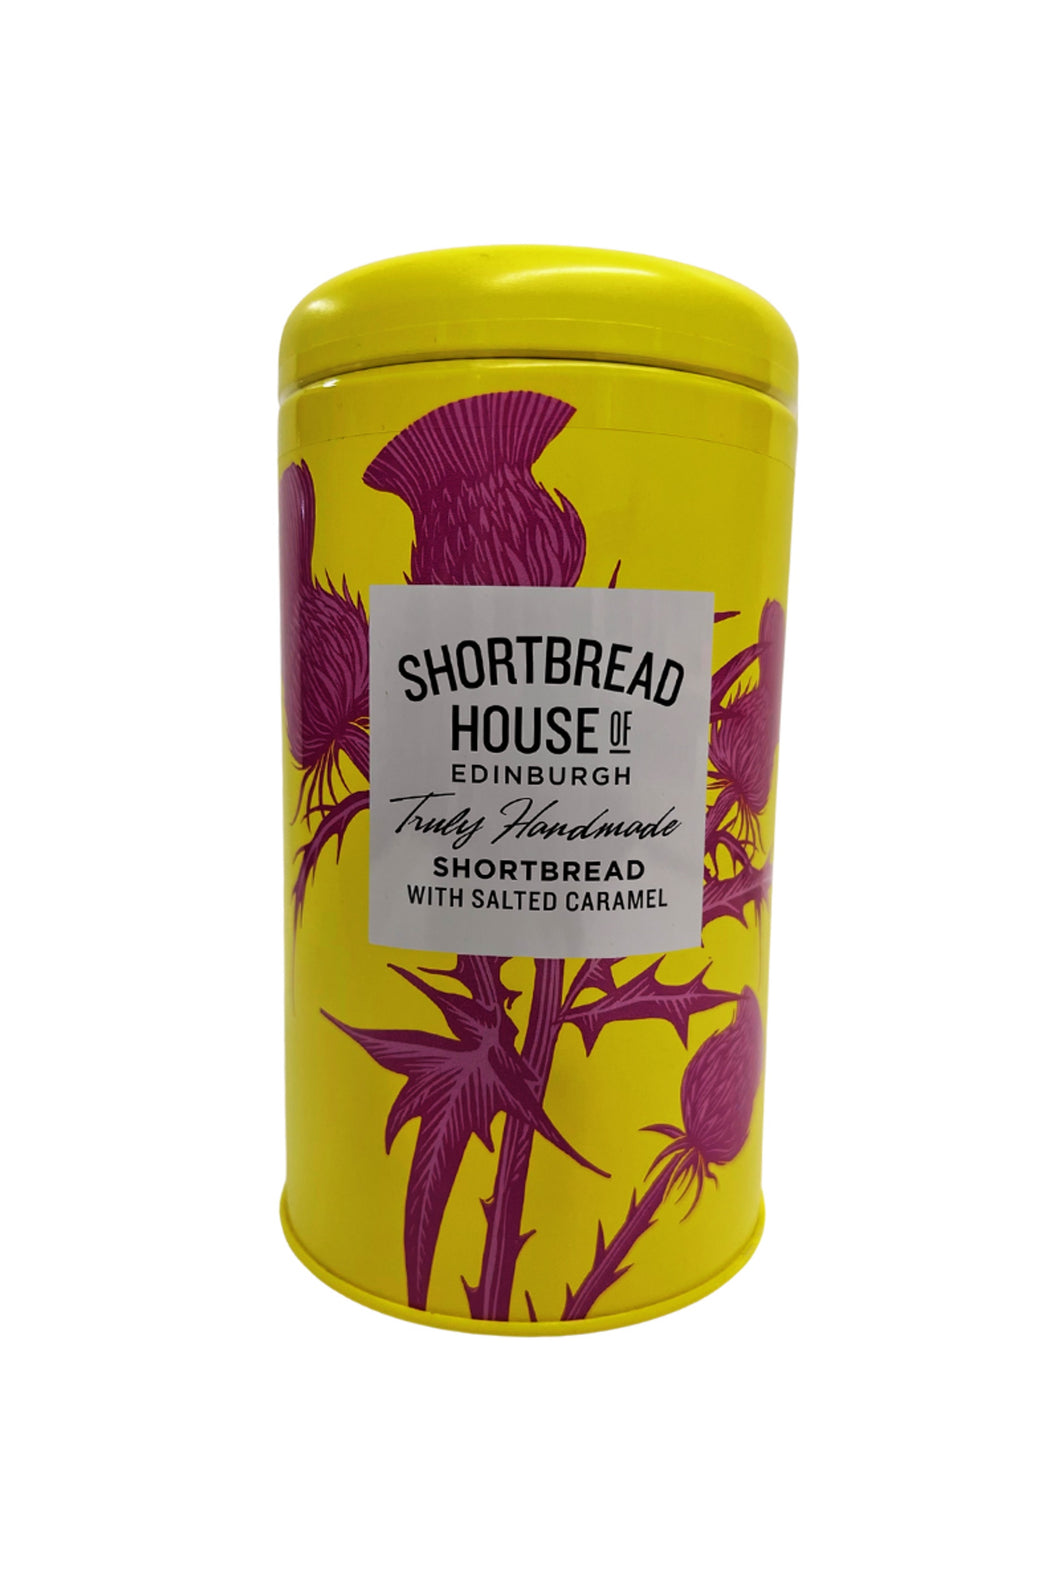 Shortbread House of Edinburgh - Shortbread Biscuits Short Tin, Salted Caramel